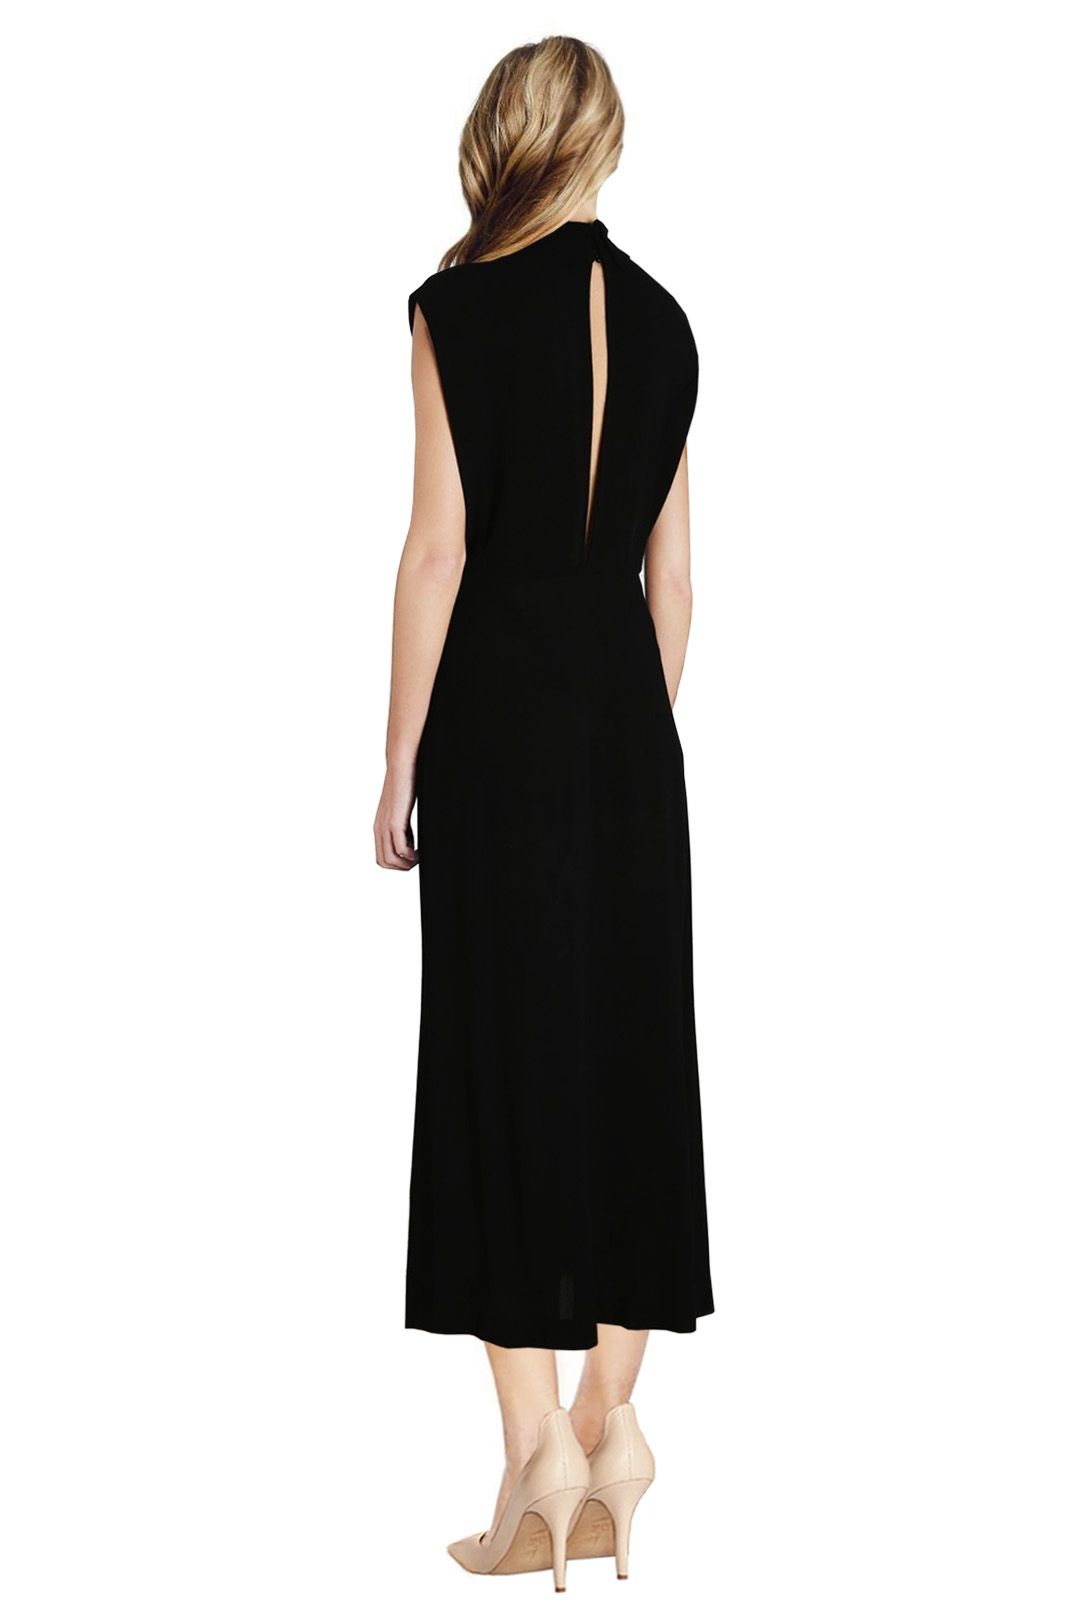 Zimmermann - Roll Collar Long Dress - Black - Back